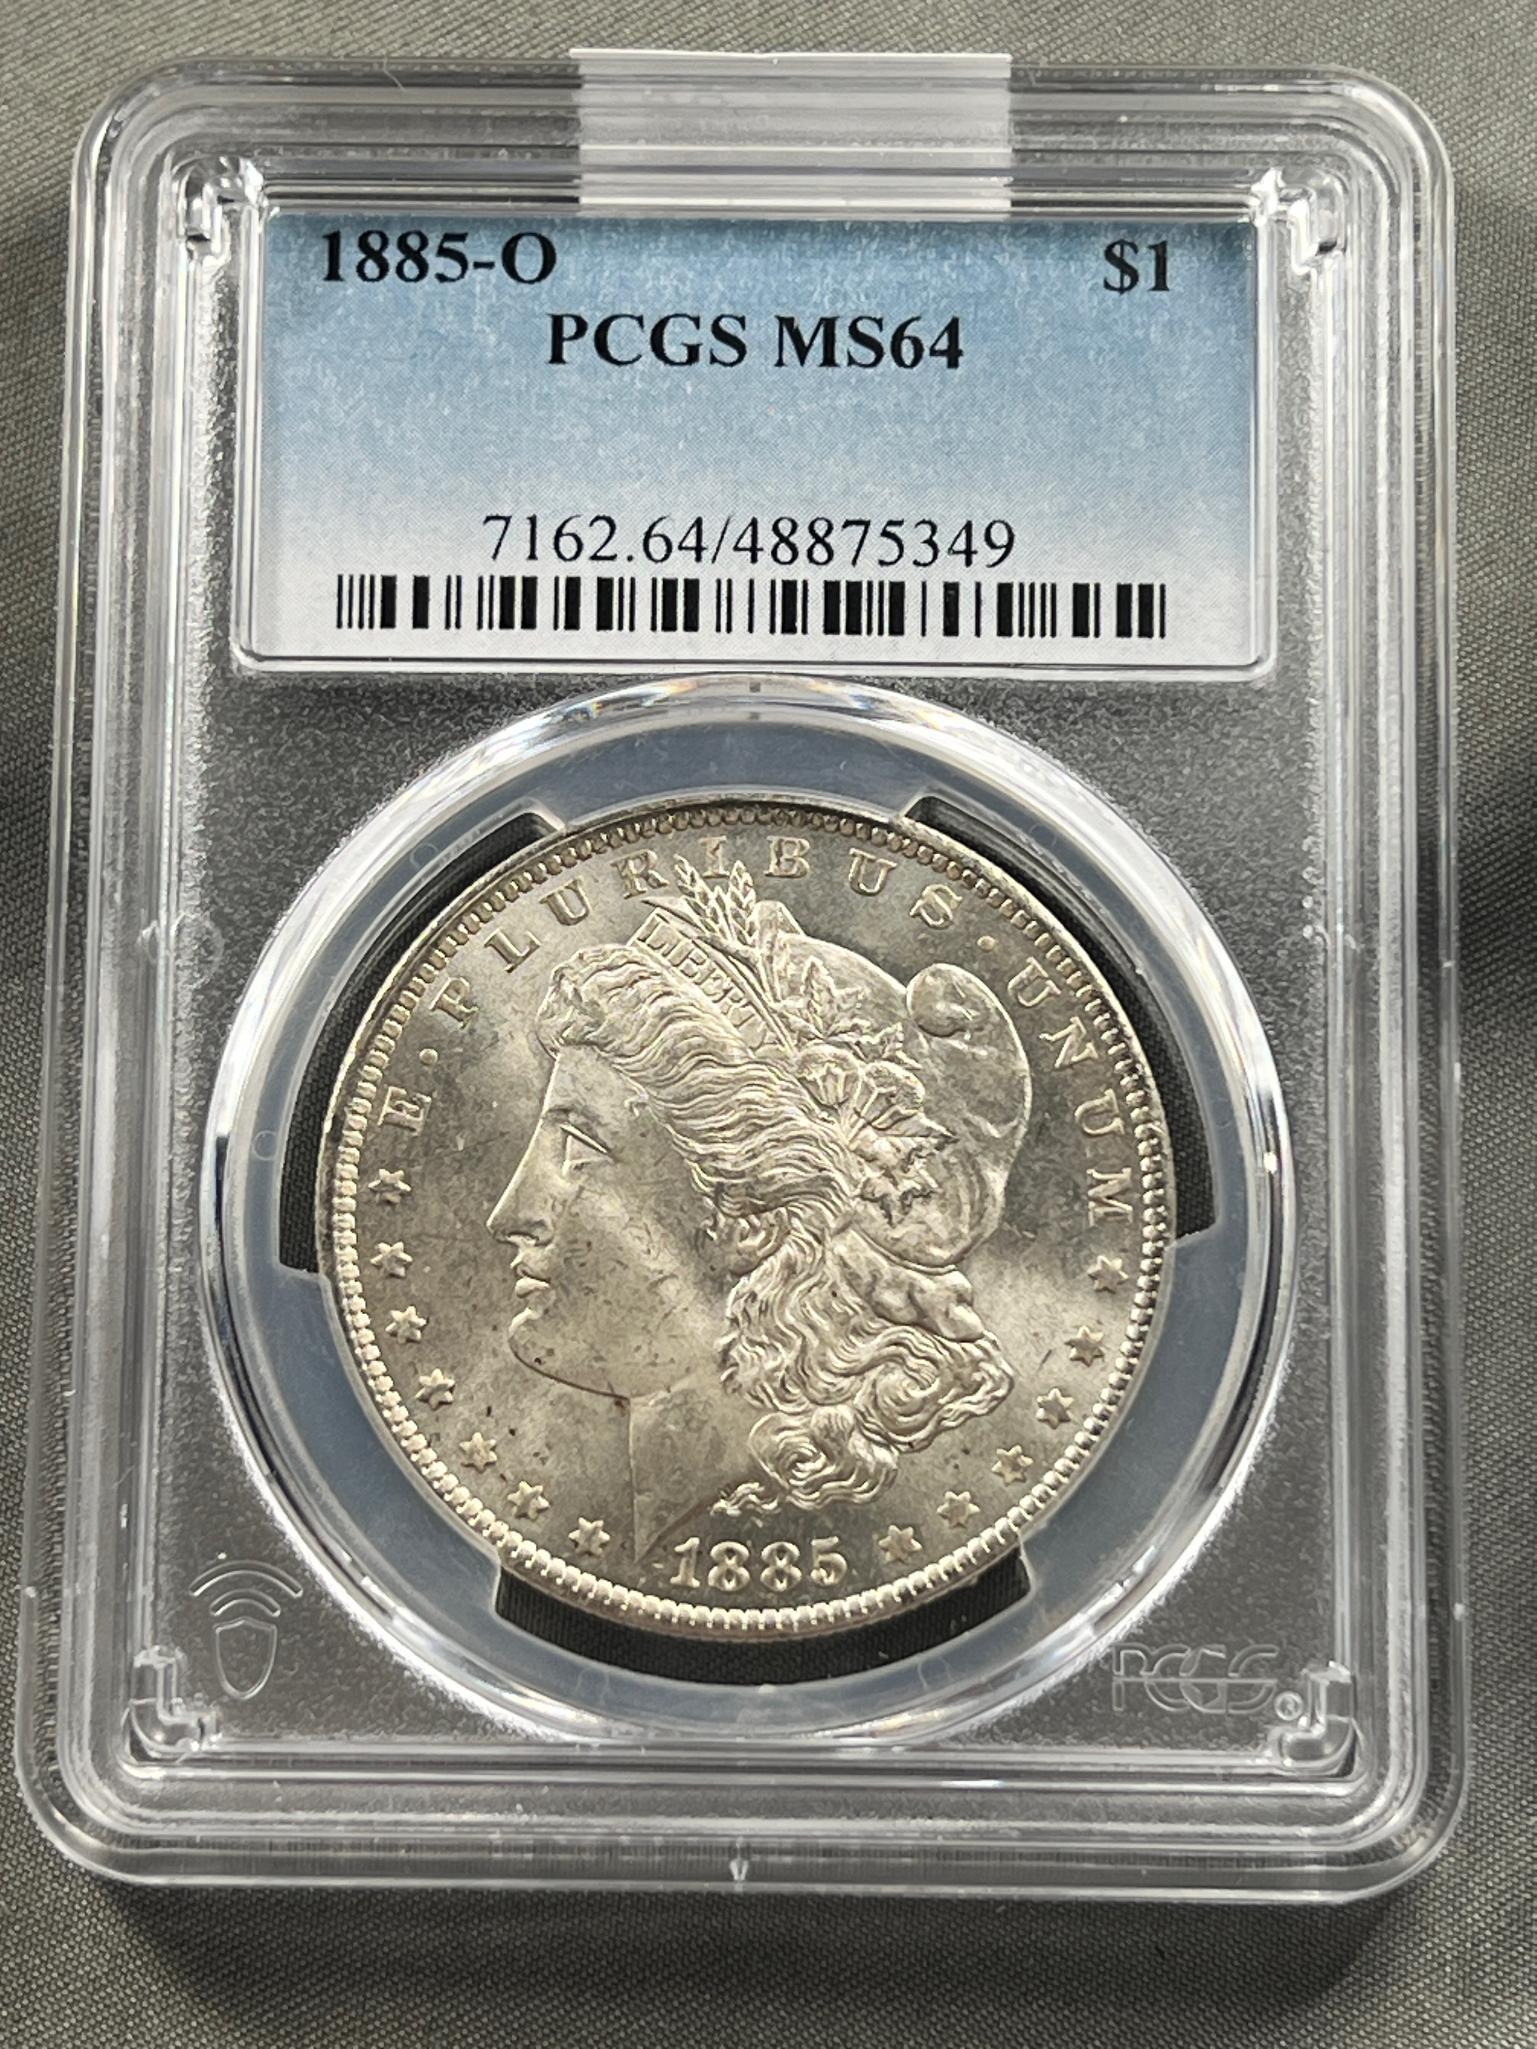 1885-O Morgan Silver Dollar in PCGS MS64 Holder